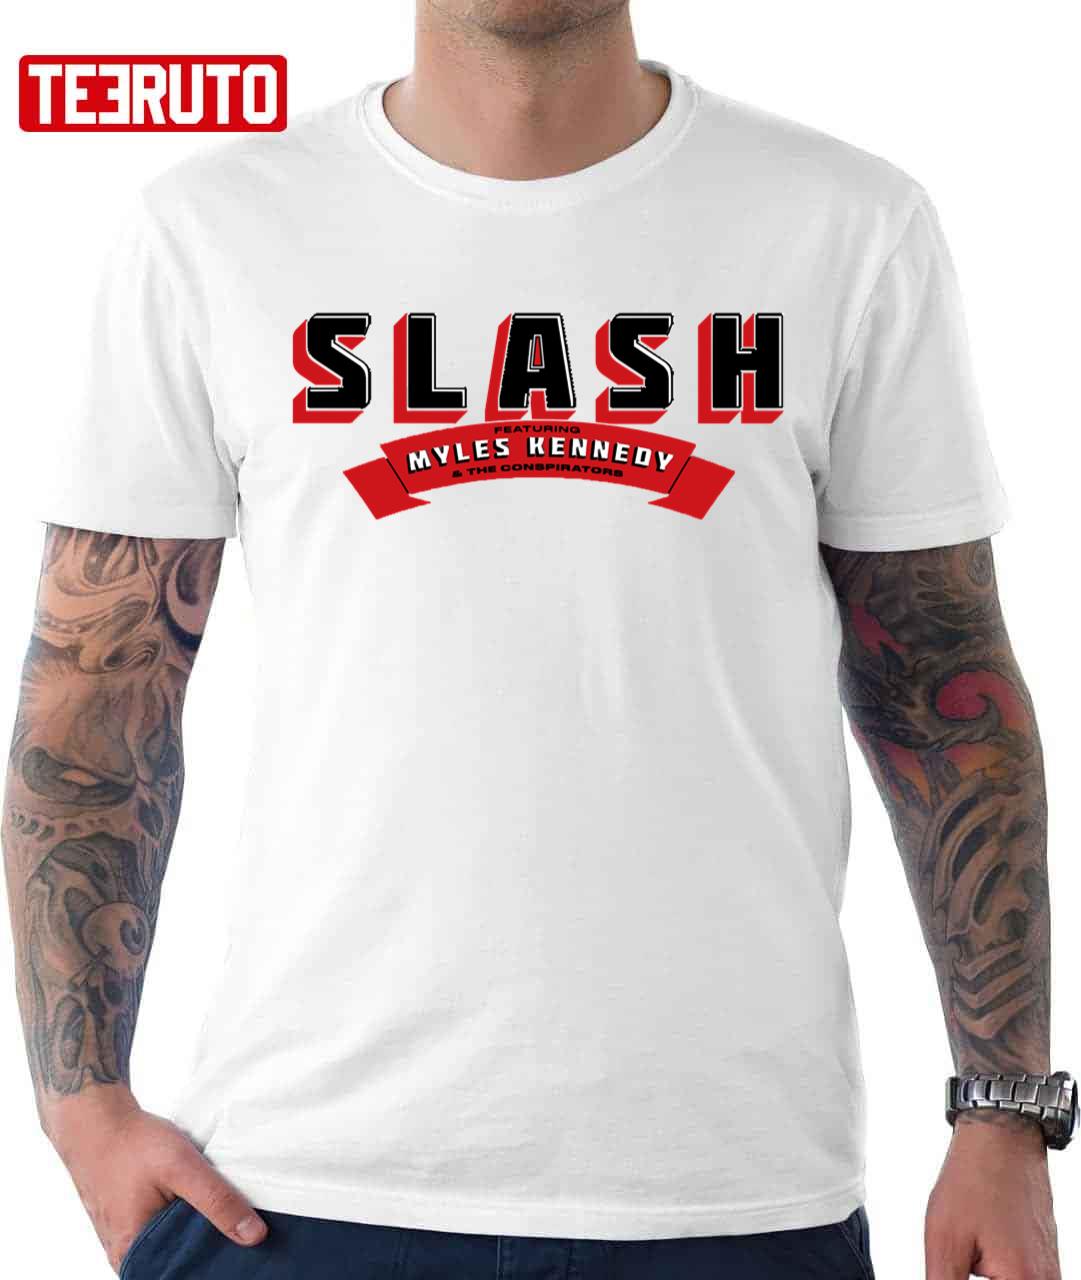 Metal Print Slash Feat Myles Kennedy Tour Dates 2019 T-Shirt by Abang Kera  - Pixels